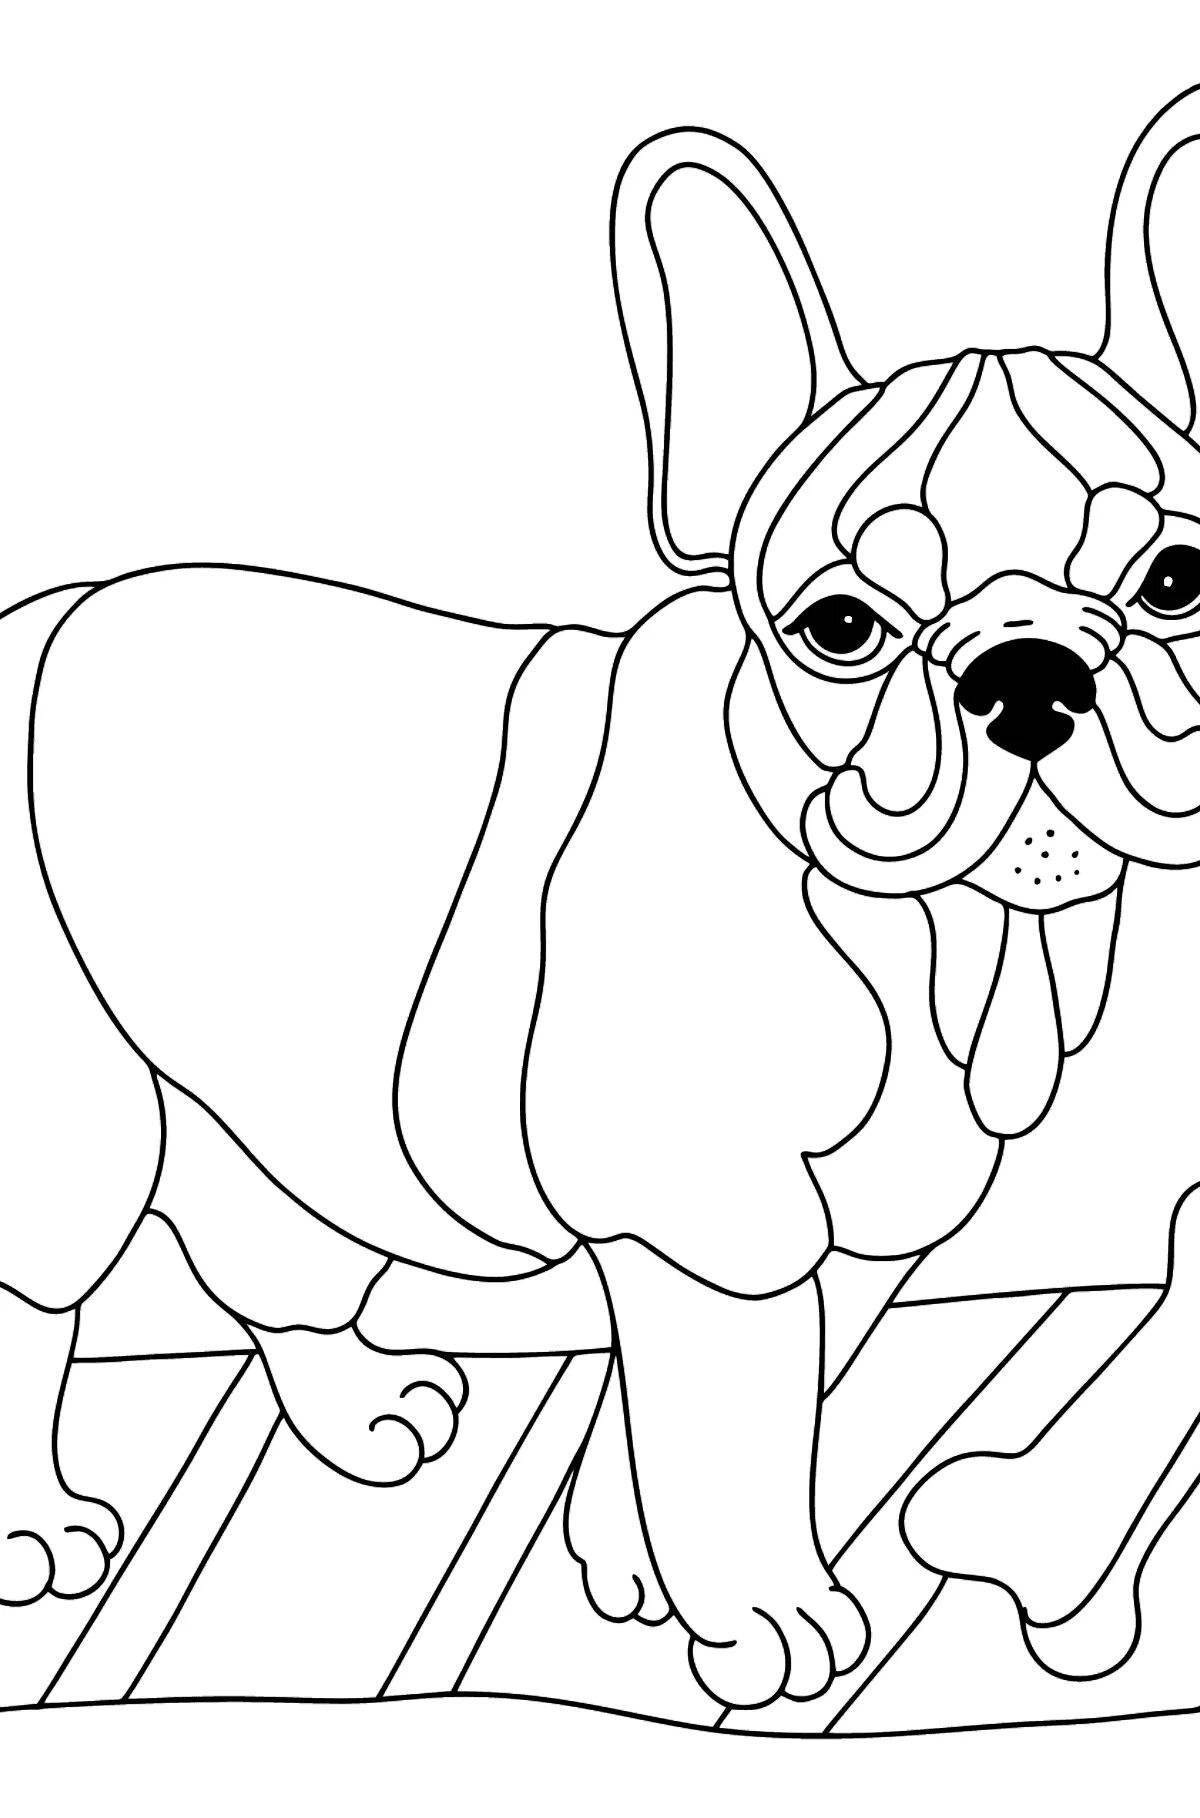 Naughty bulldog coloring book for kids